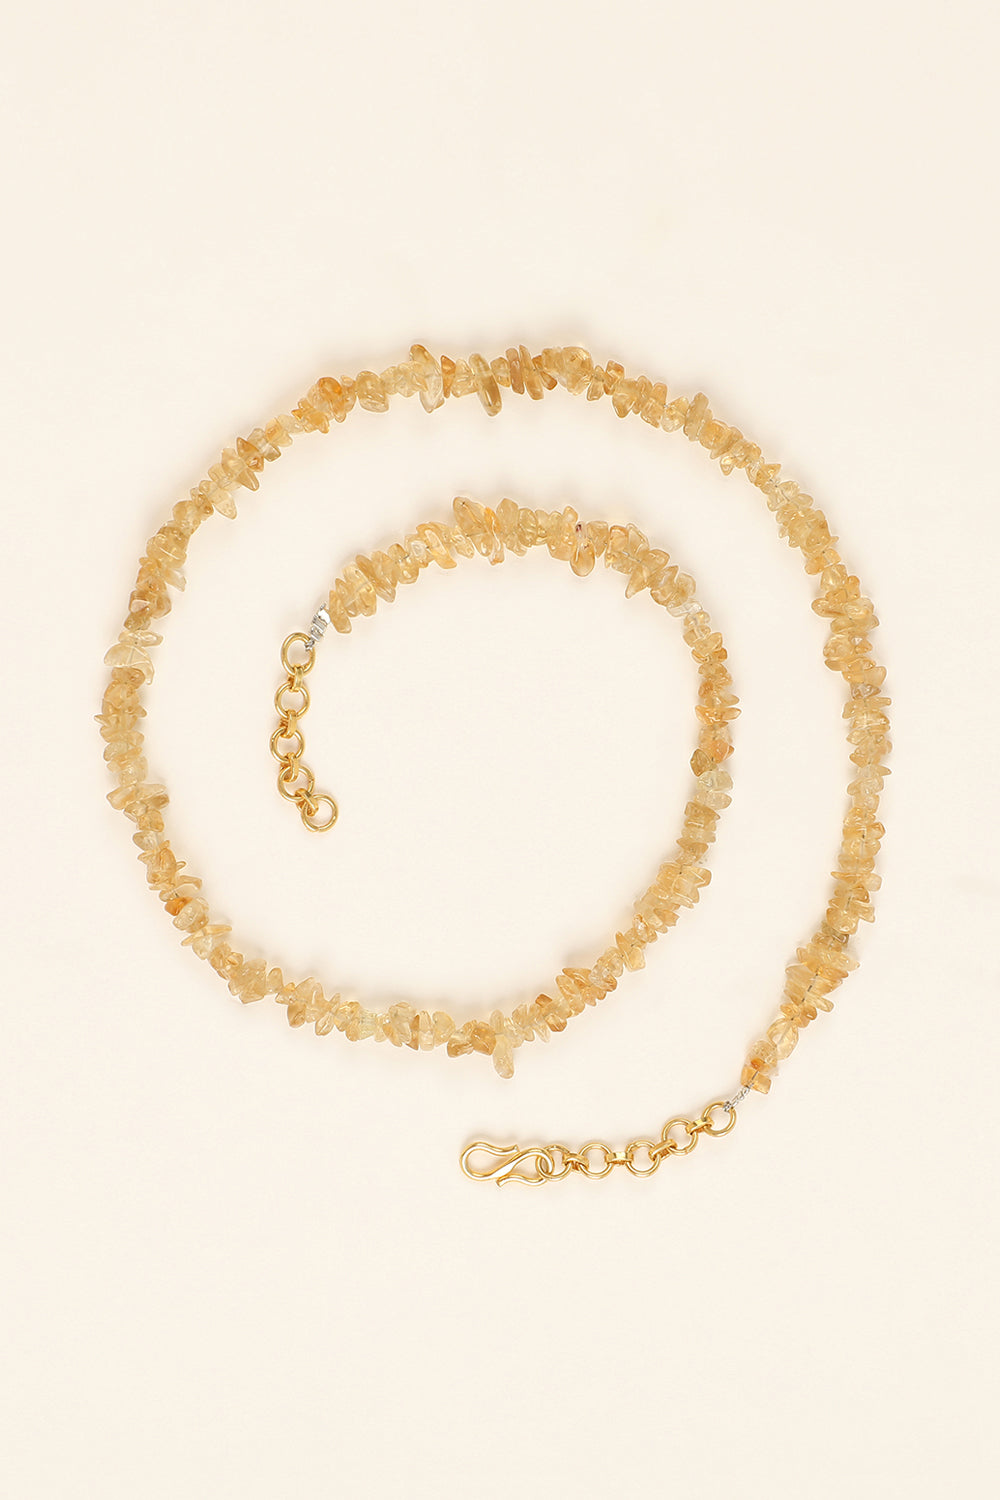 Sepia Stone Necklace